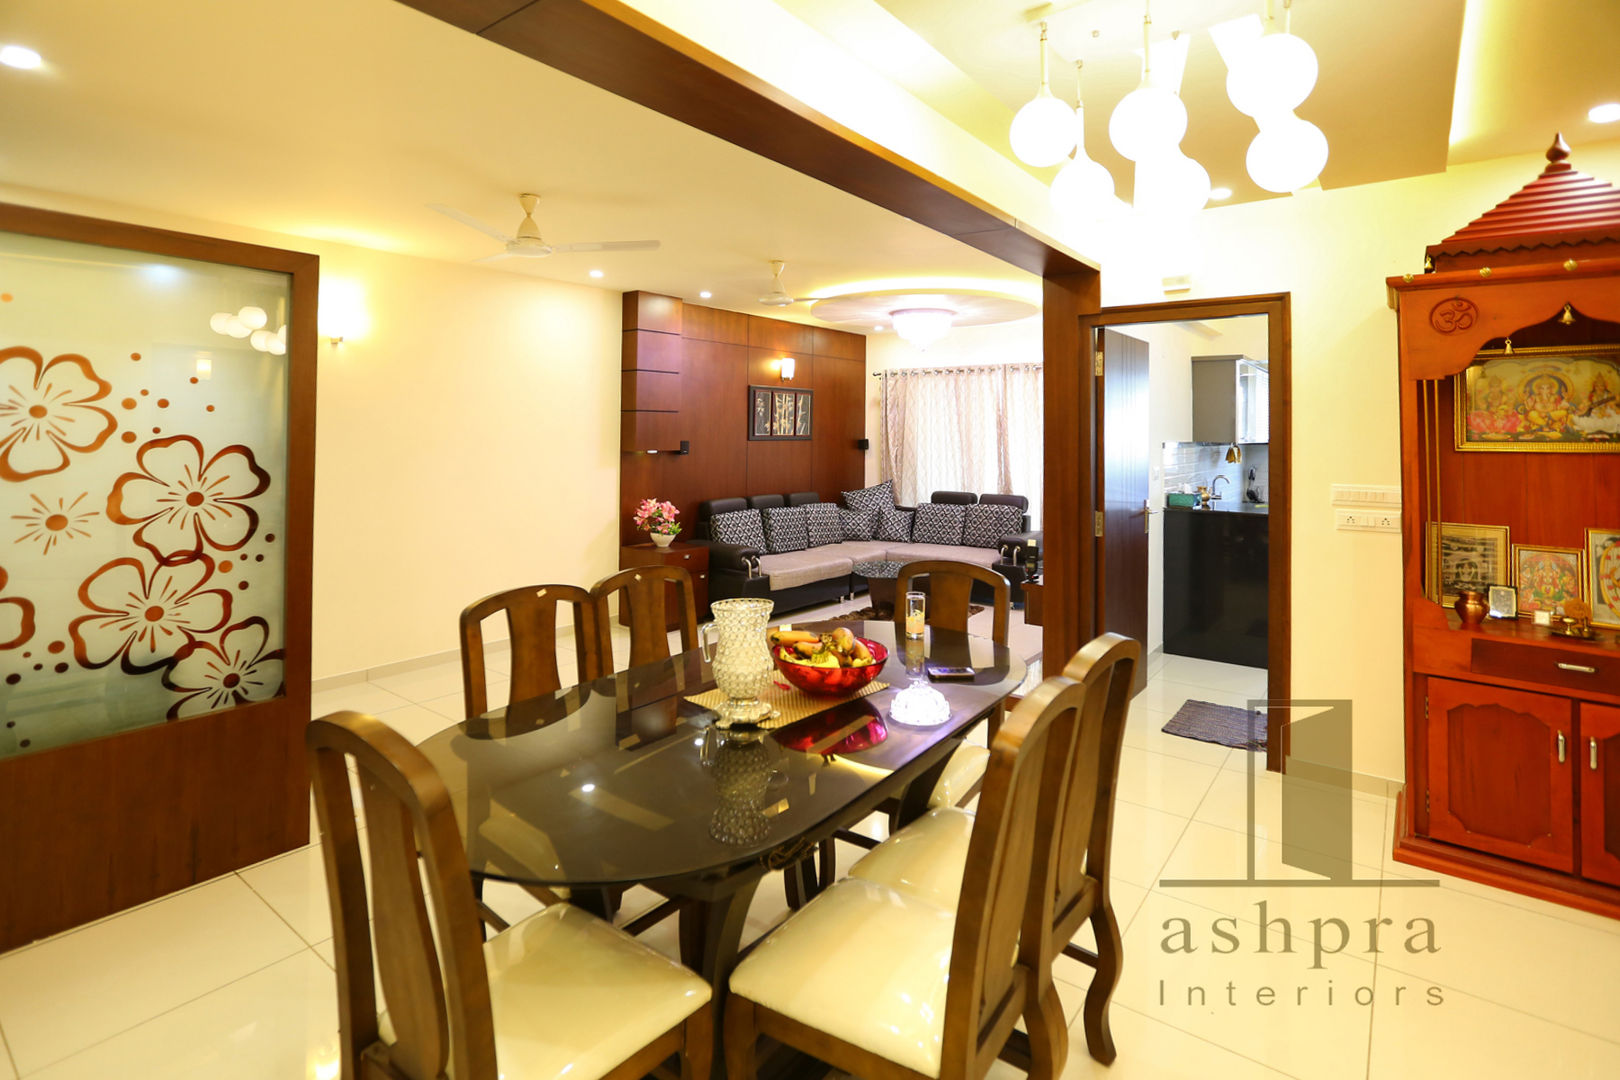 Interior work for a 2 bedroom apartment @ Mangalore.., Ashpra interiors Ashpra interiors Comedores de estilo asiático Mesas